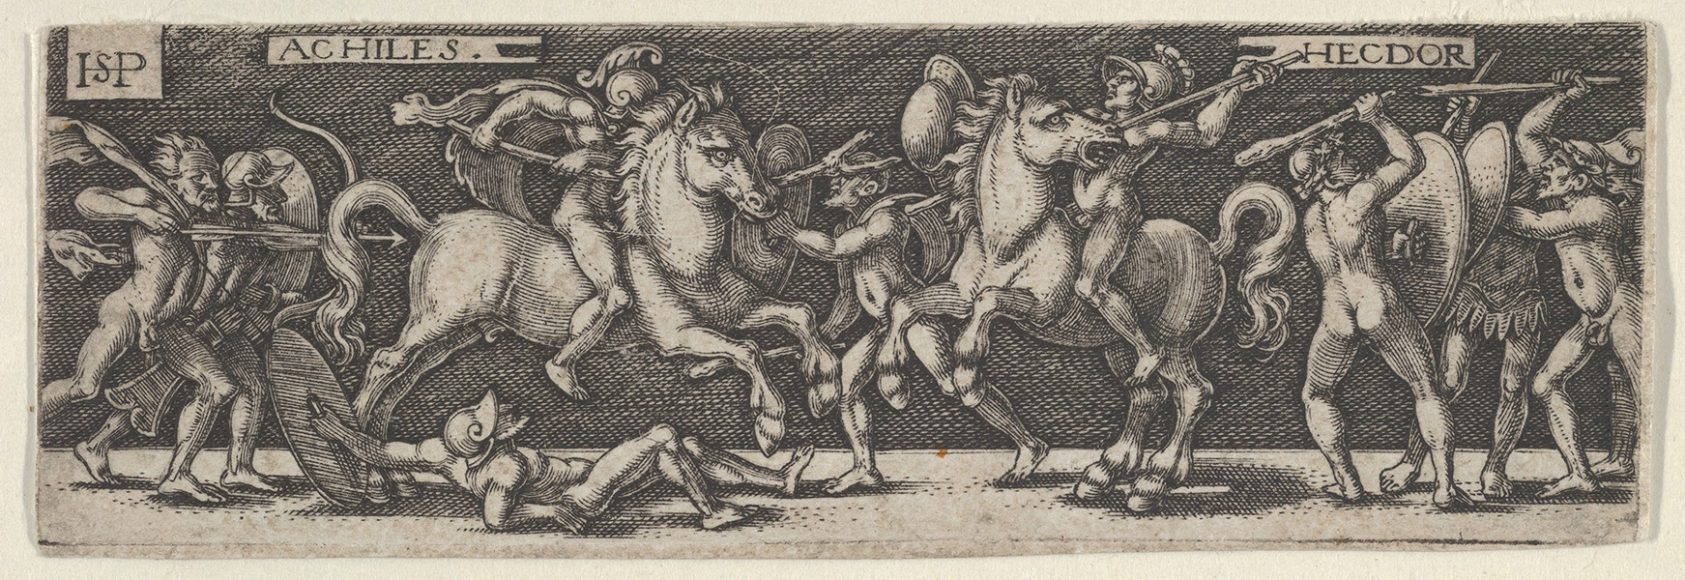 Sebald Beham’s “Achilles and Hector” (1518-30), engraving. The Metropolitan Museum of Art.